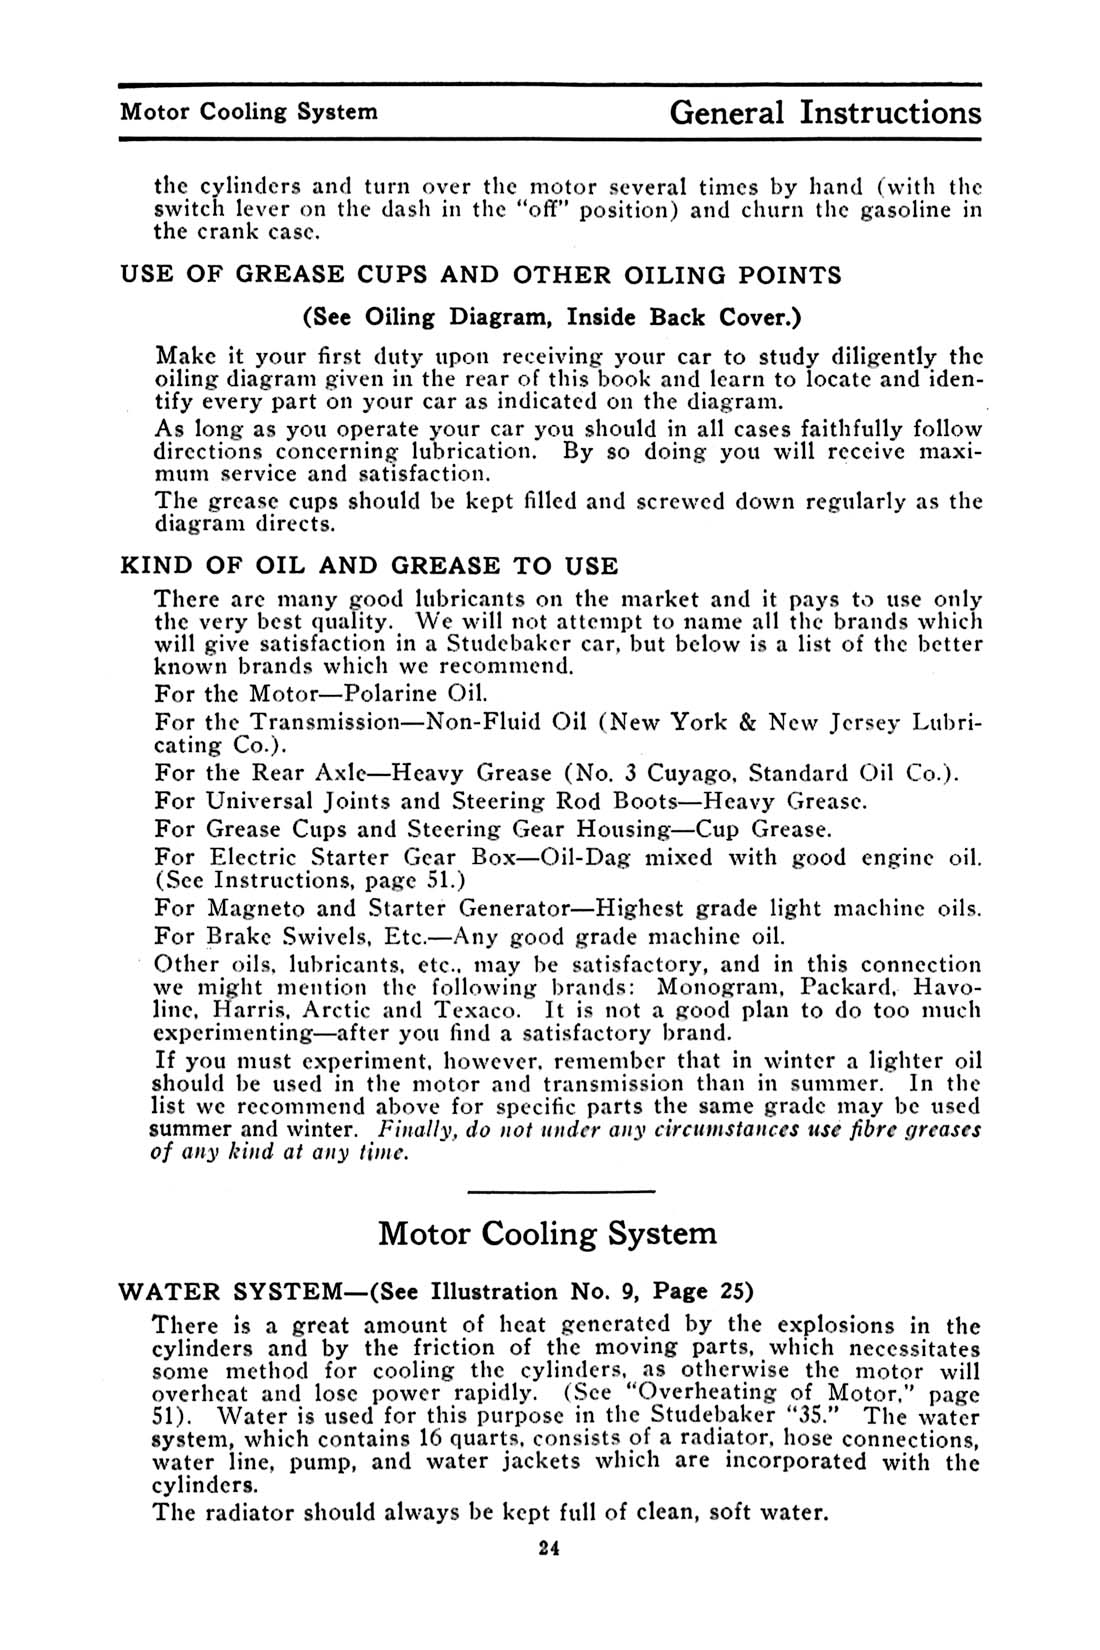 1913_Studebaker_Model_35_Manual-24